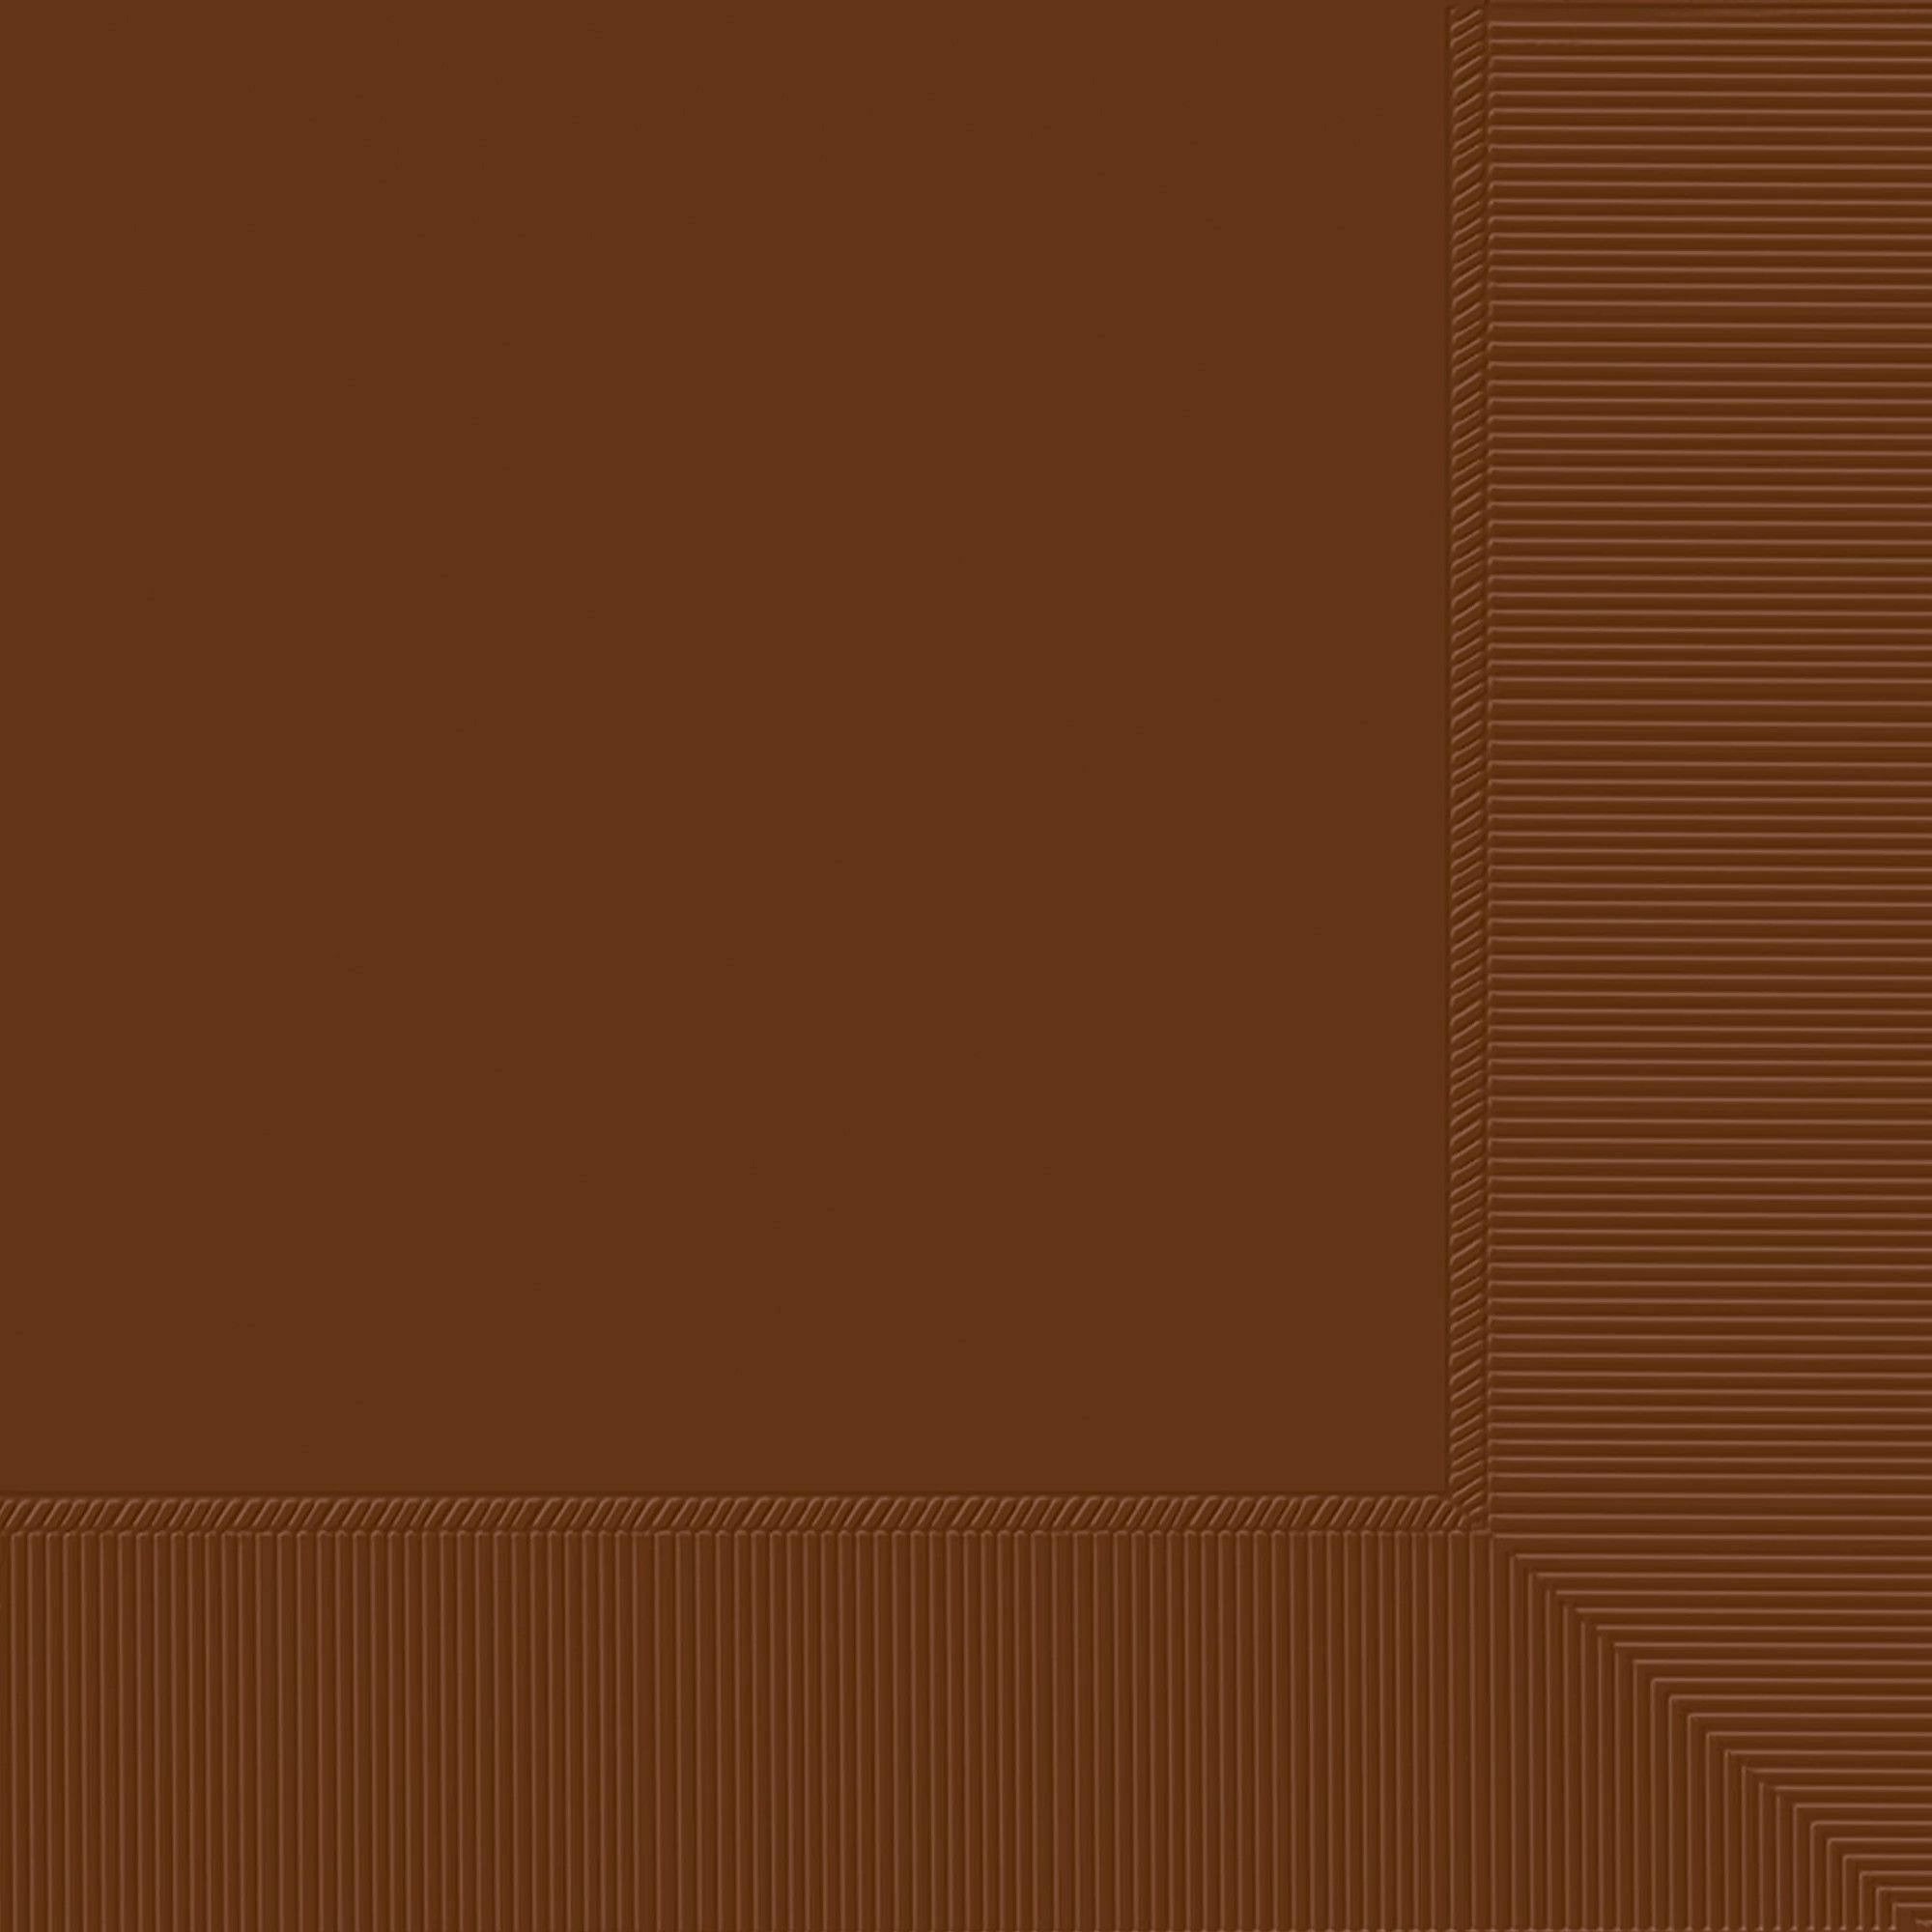 Amscan BASIC Chocolate Brown - Beverage Napkins, 40 Ct.